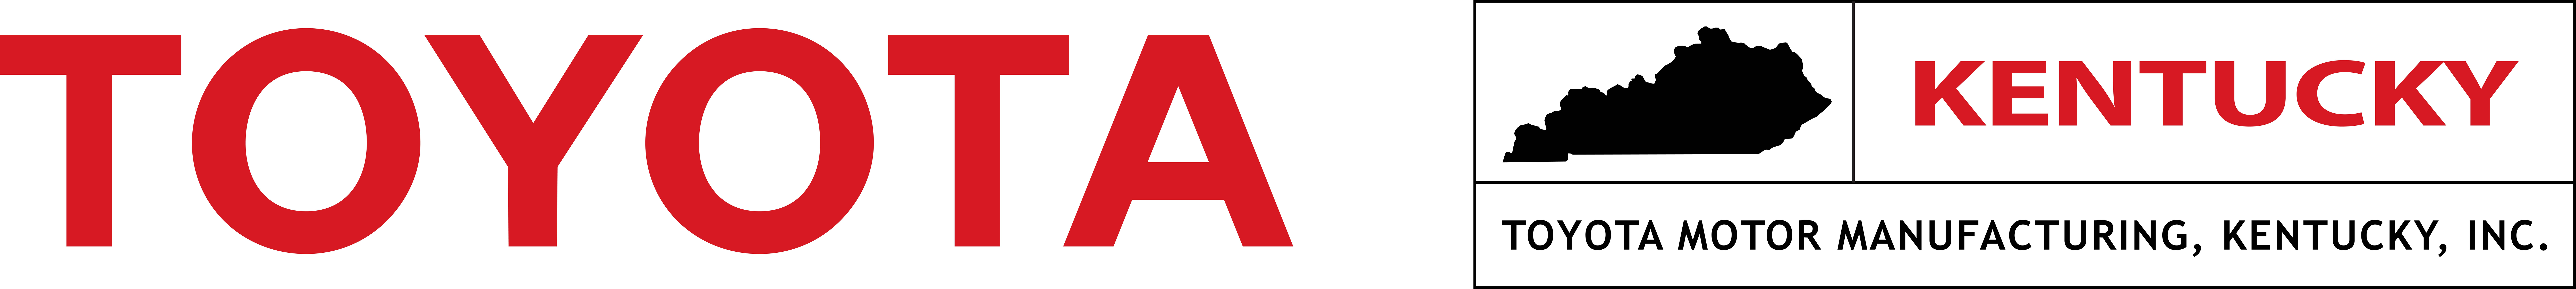 Toyota Kentucky Logo - Toyota Grant Application Approved! - Louisville Urban League